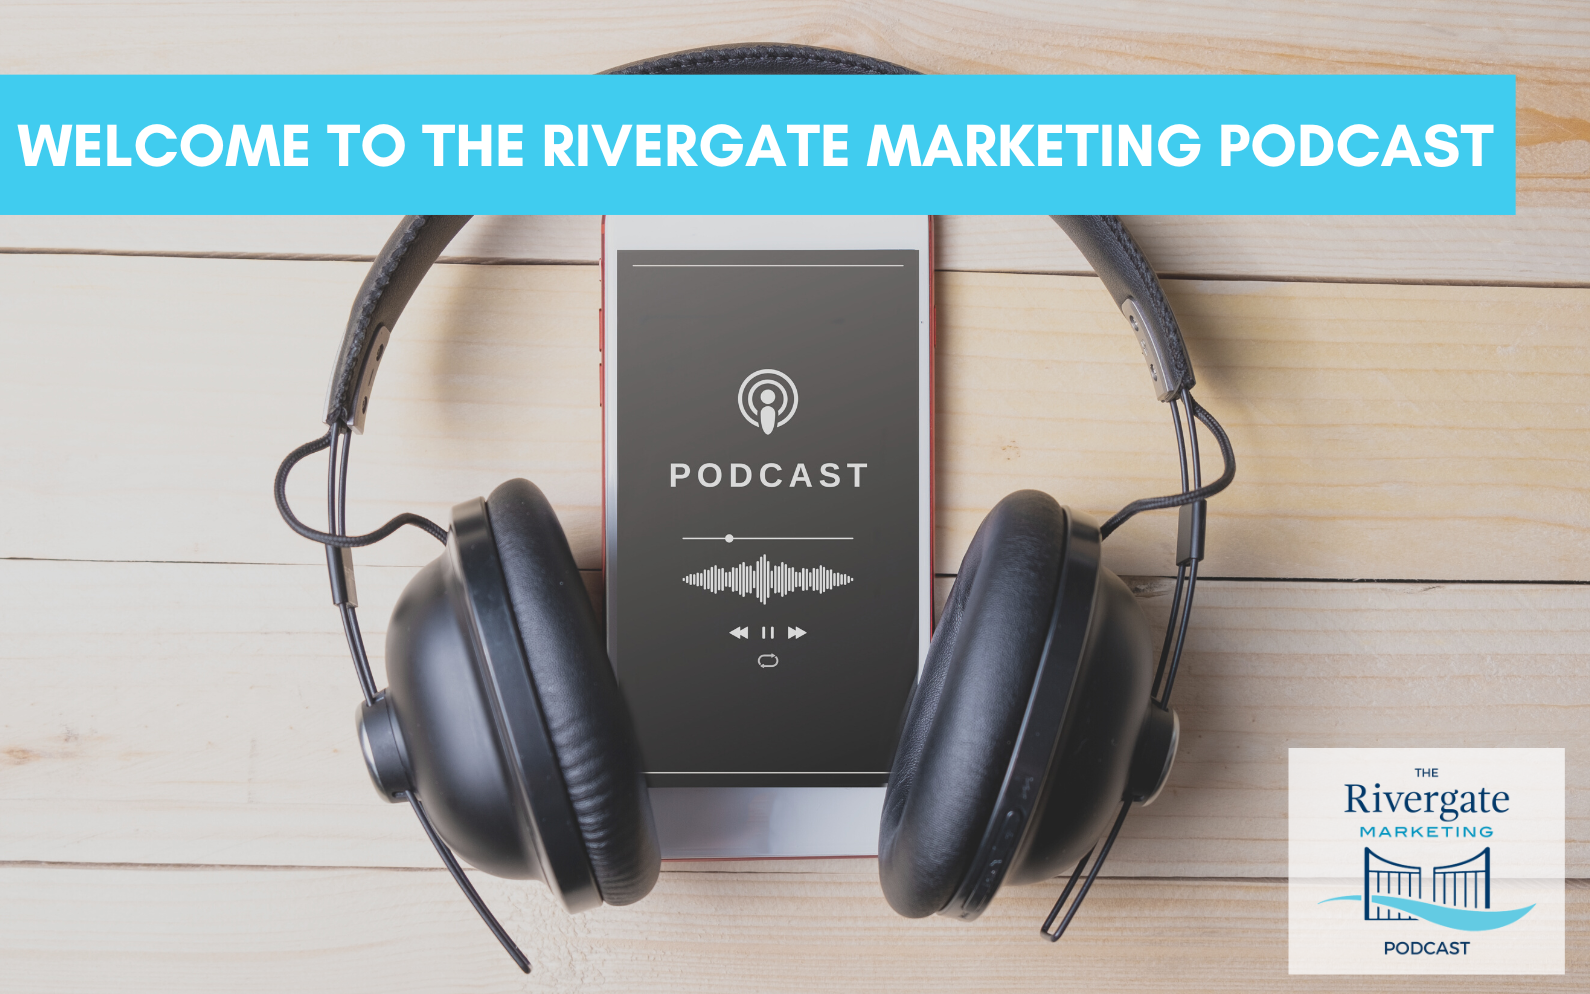 Rivergate Marketing Podcast launch.